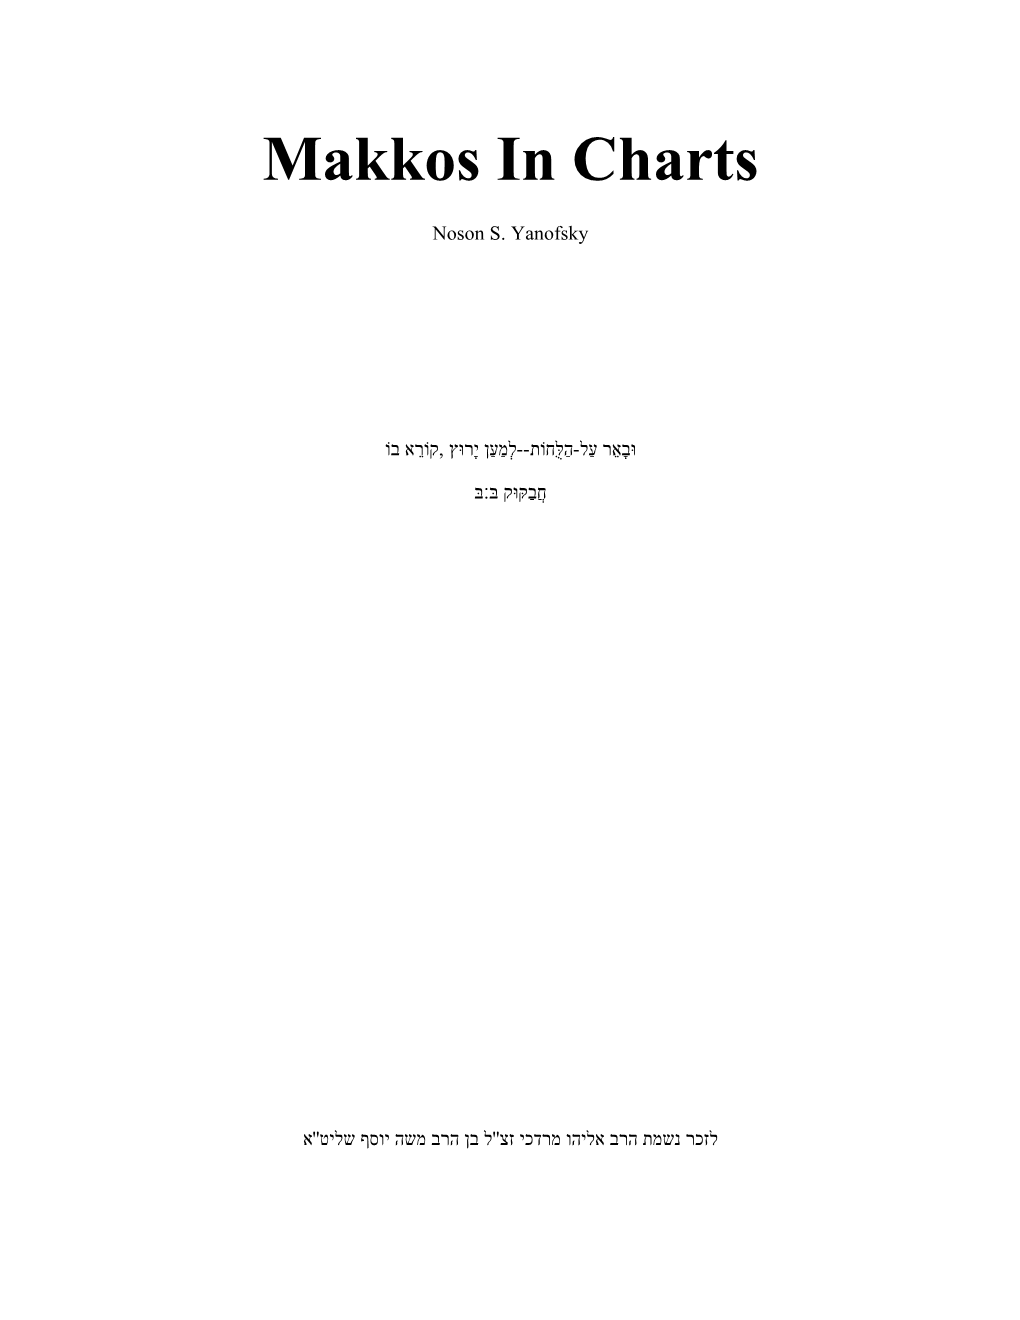 Makkos in Charts